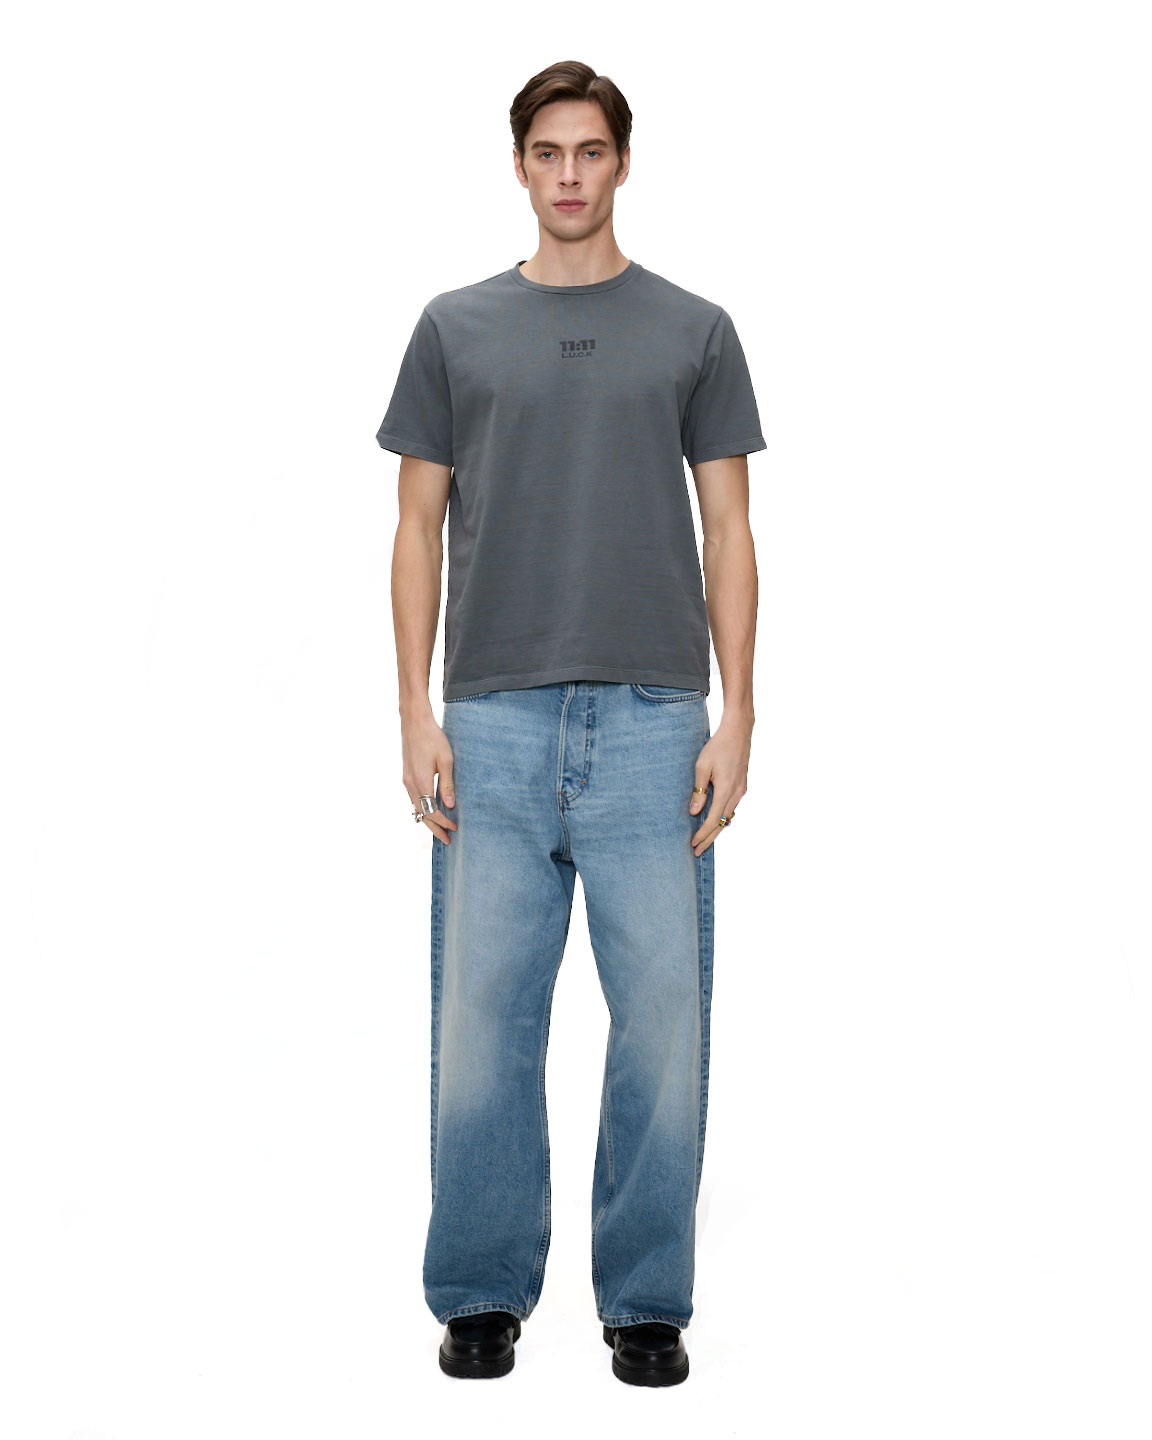 grey 1111 luck basic t-shirt male model